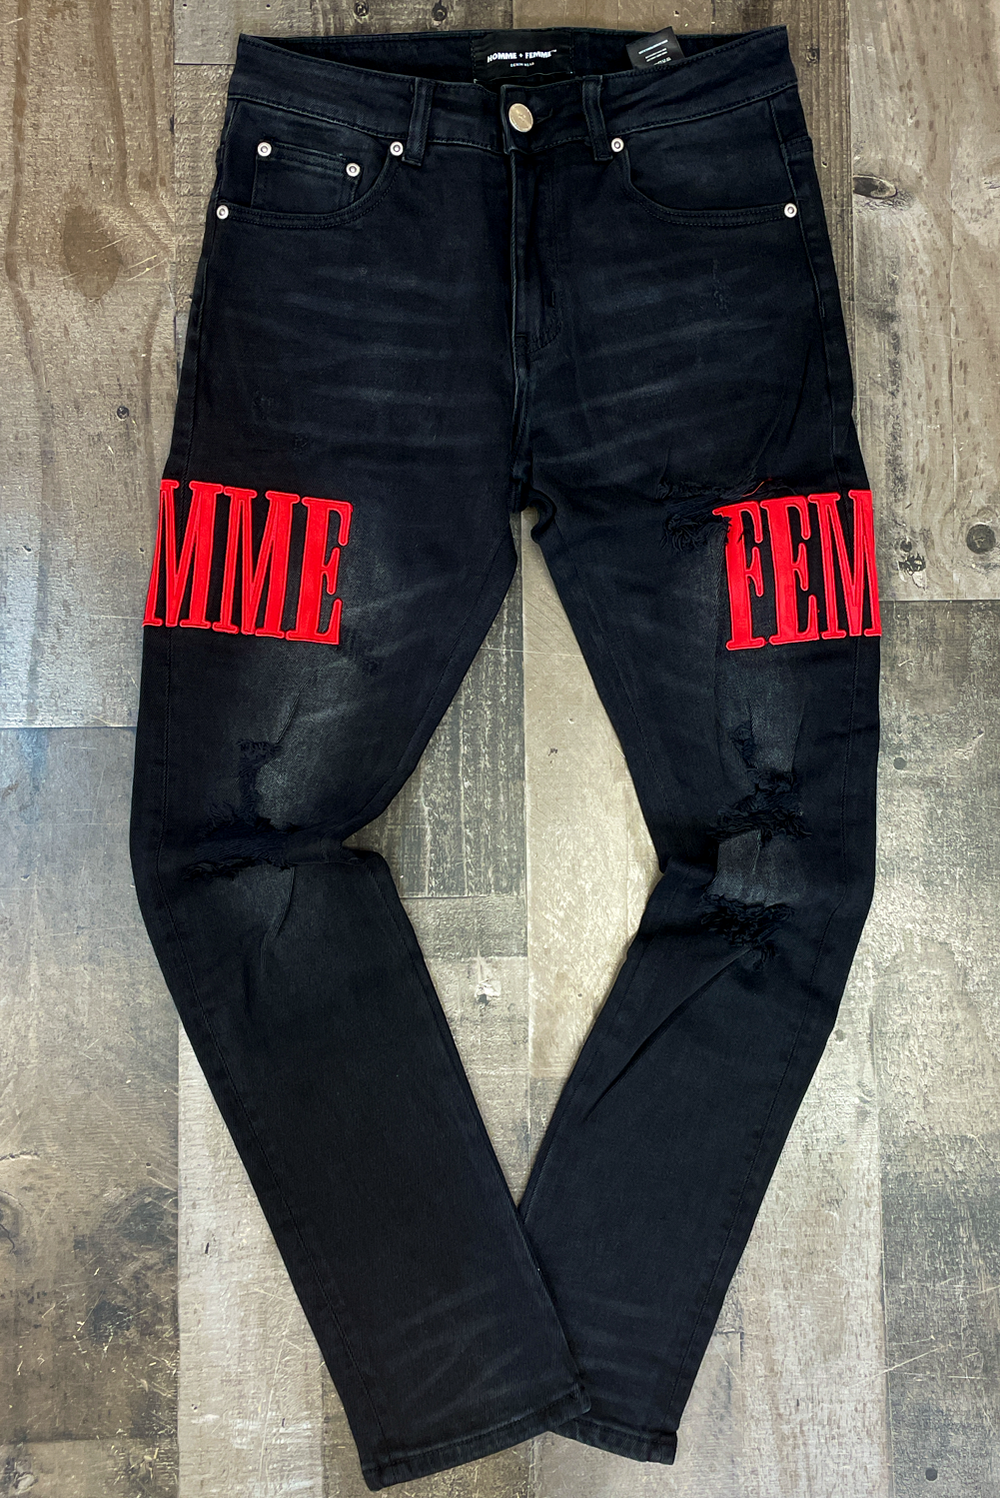 Homme Femme- letterman w/ red letters denim jeans